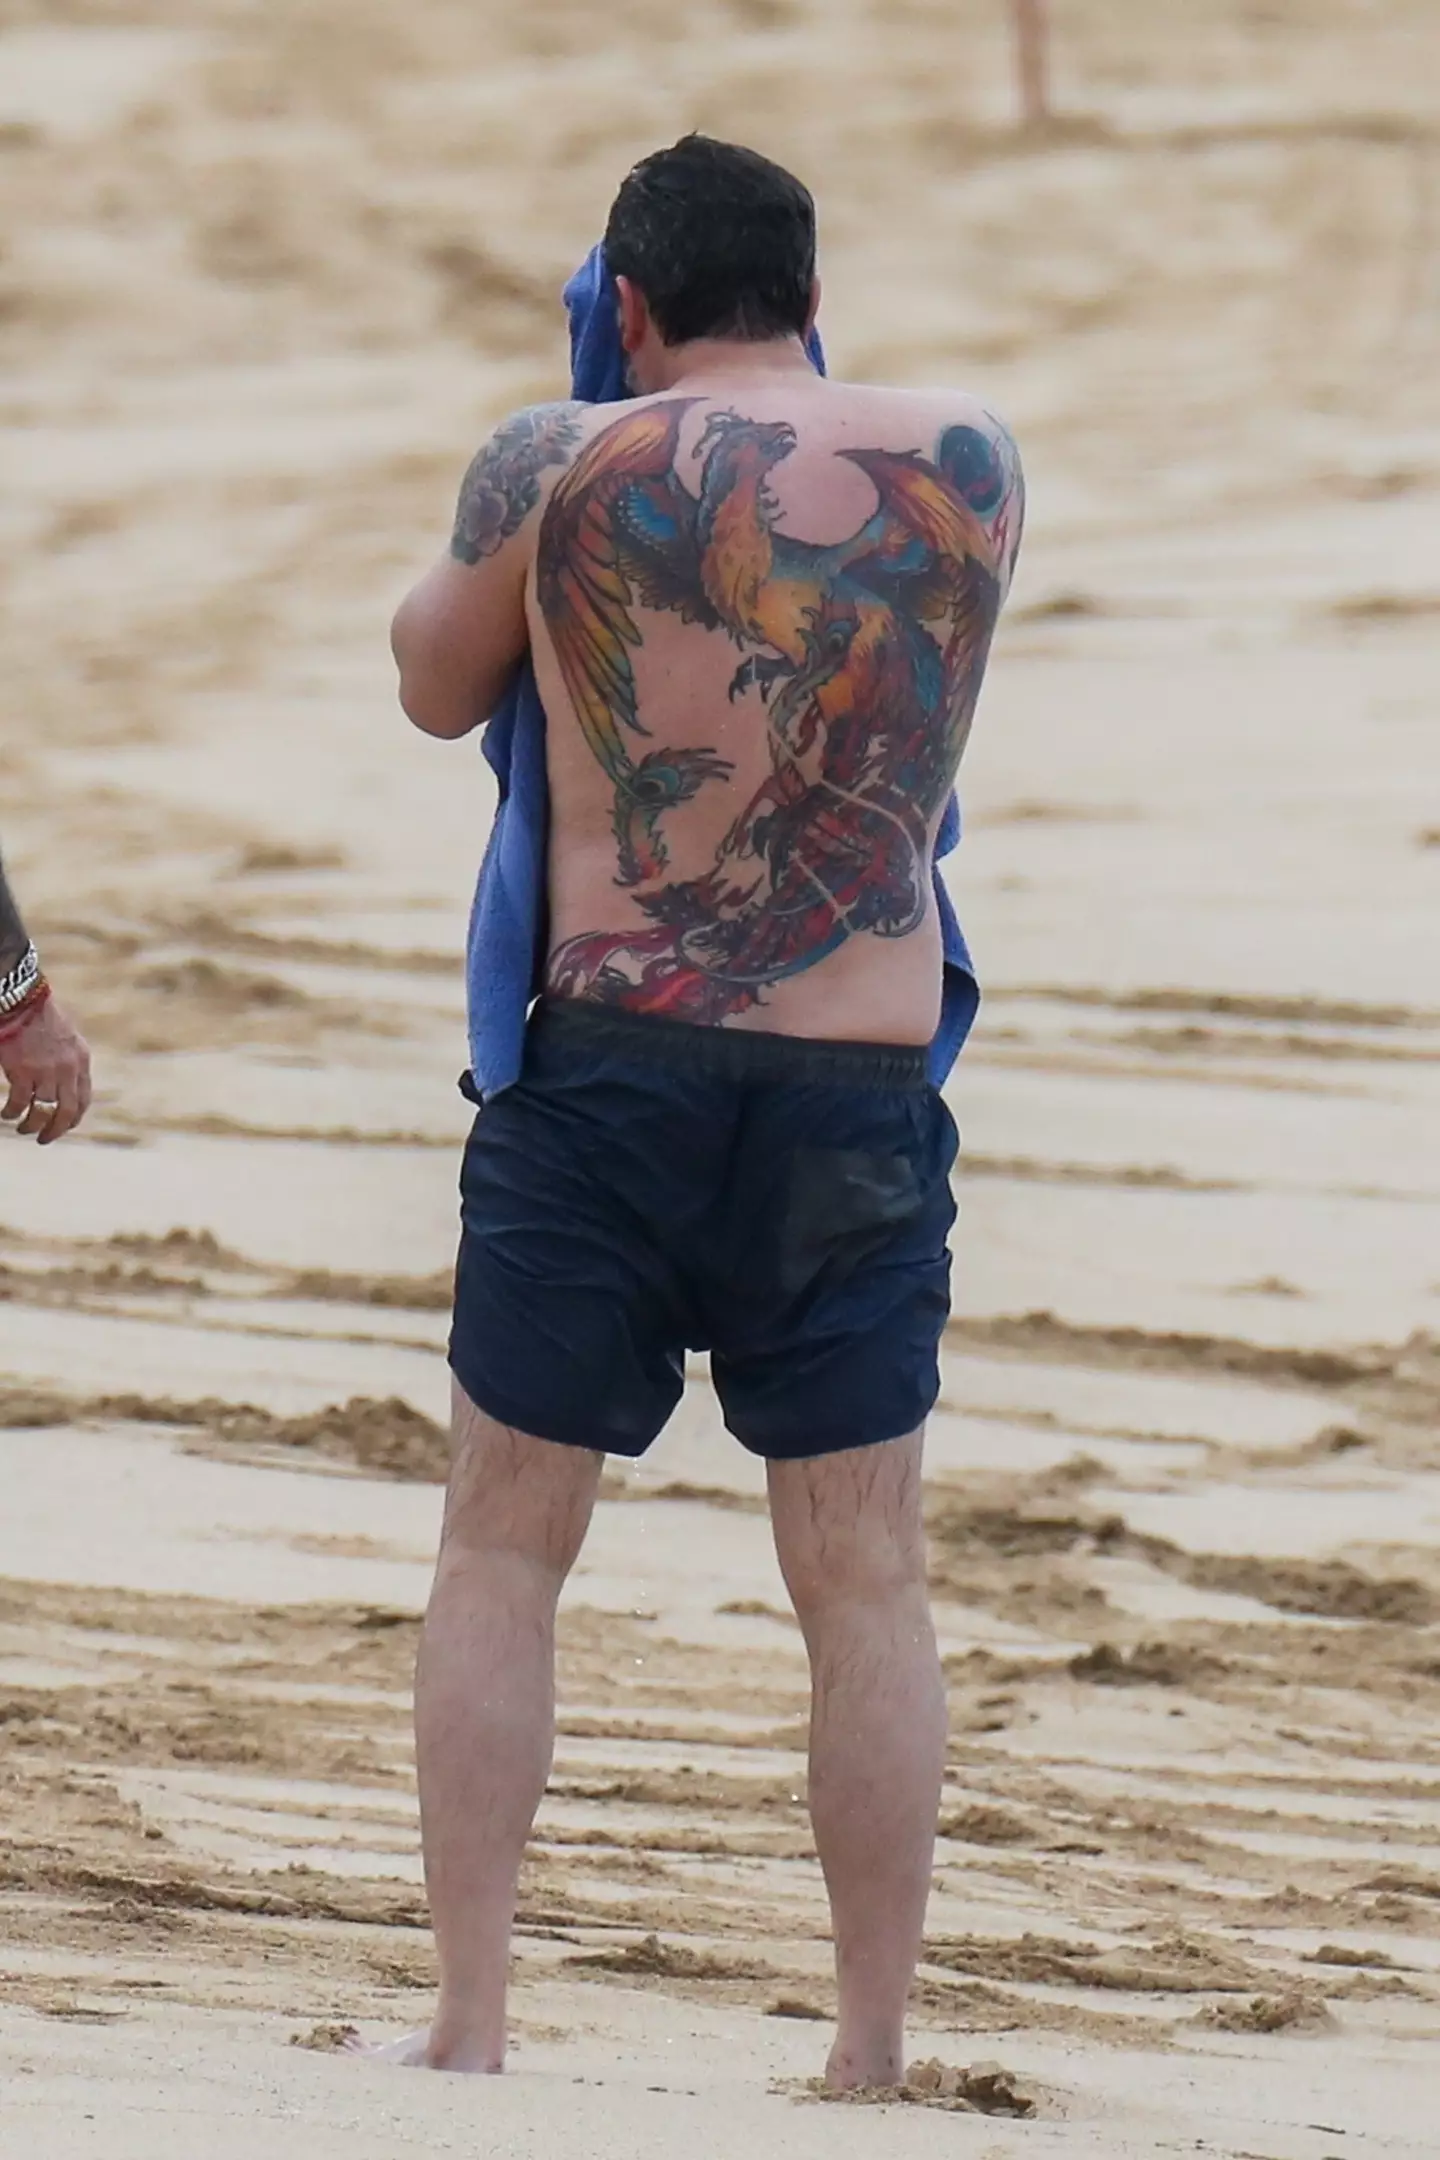 Ben Affleck's back tattoo.